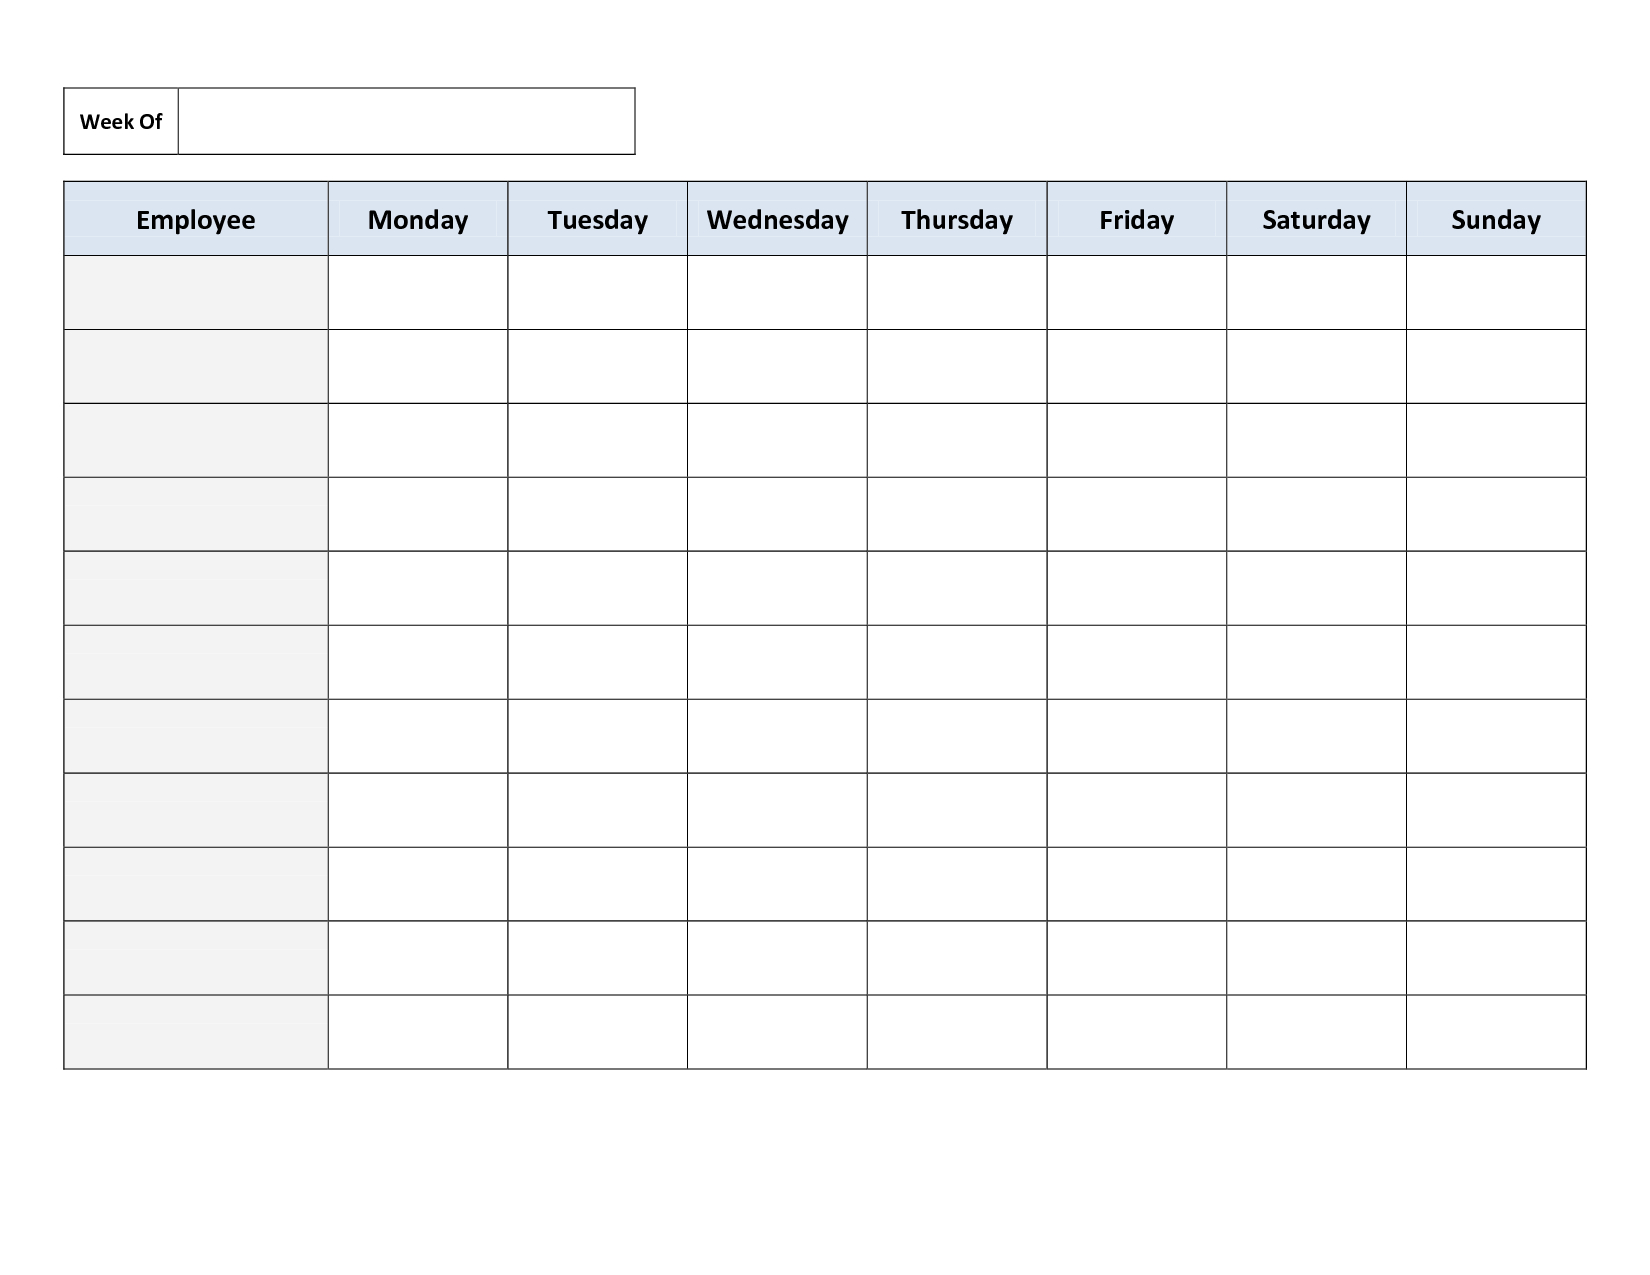 Weekly Employee Work Schedule Template. Free Blank Schedule.pdf - Free Printable Blank Weekly Schedule